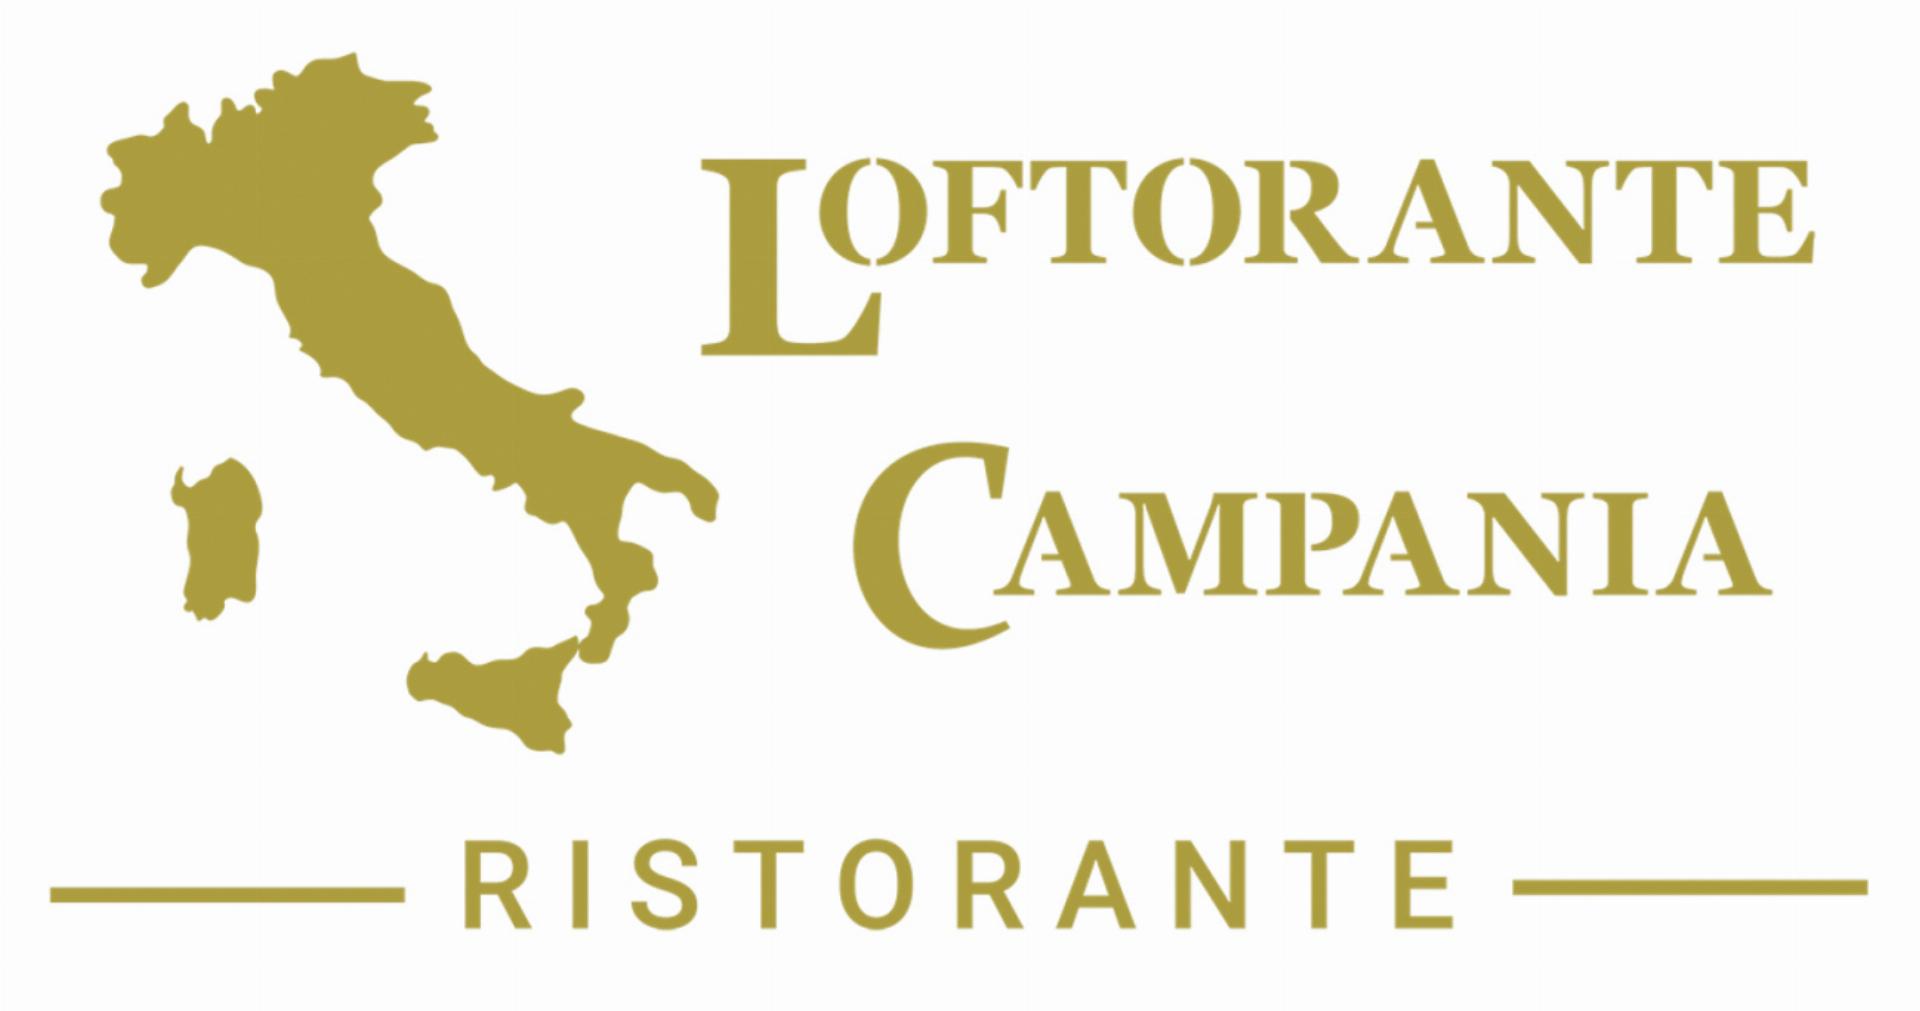 Ristorante Loftorante Campania